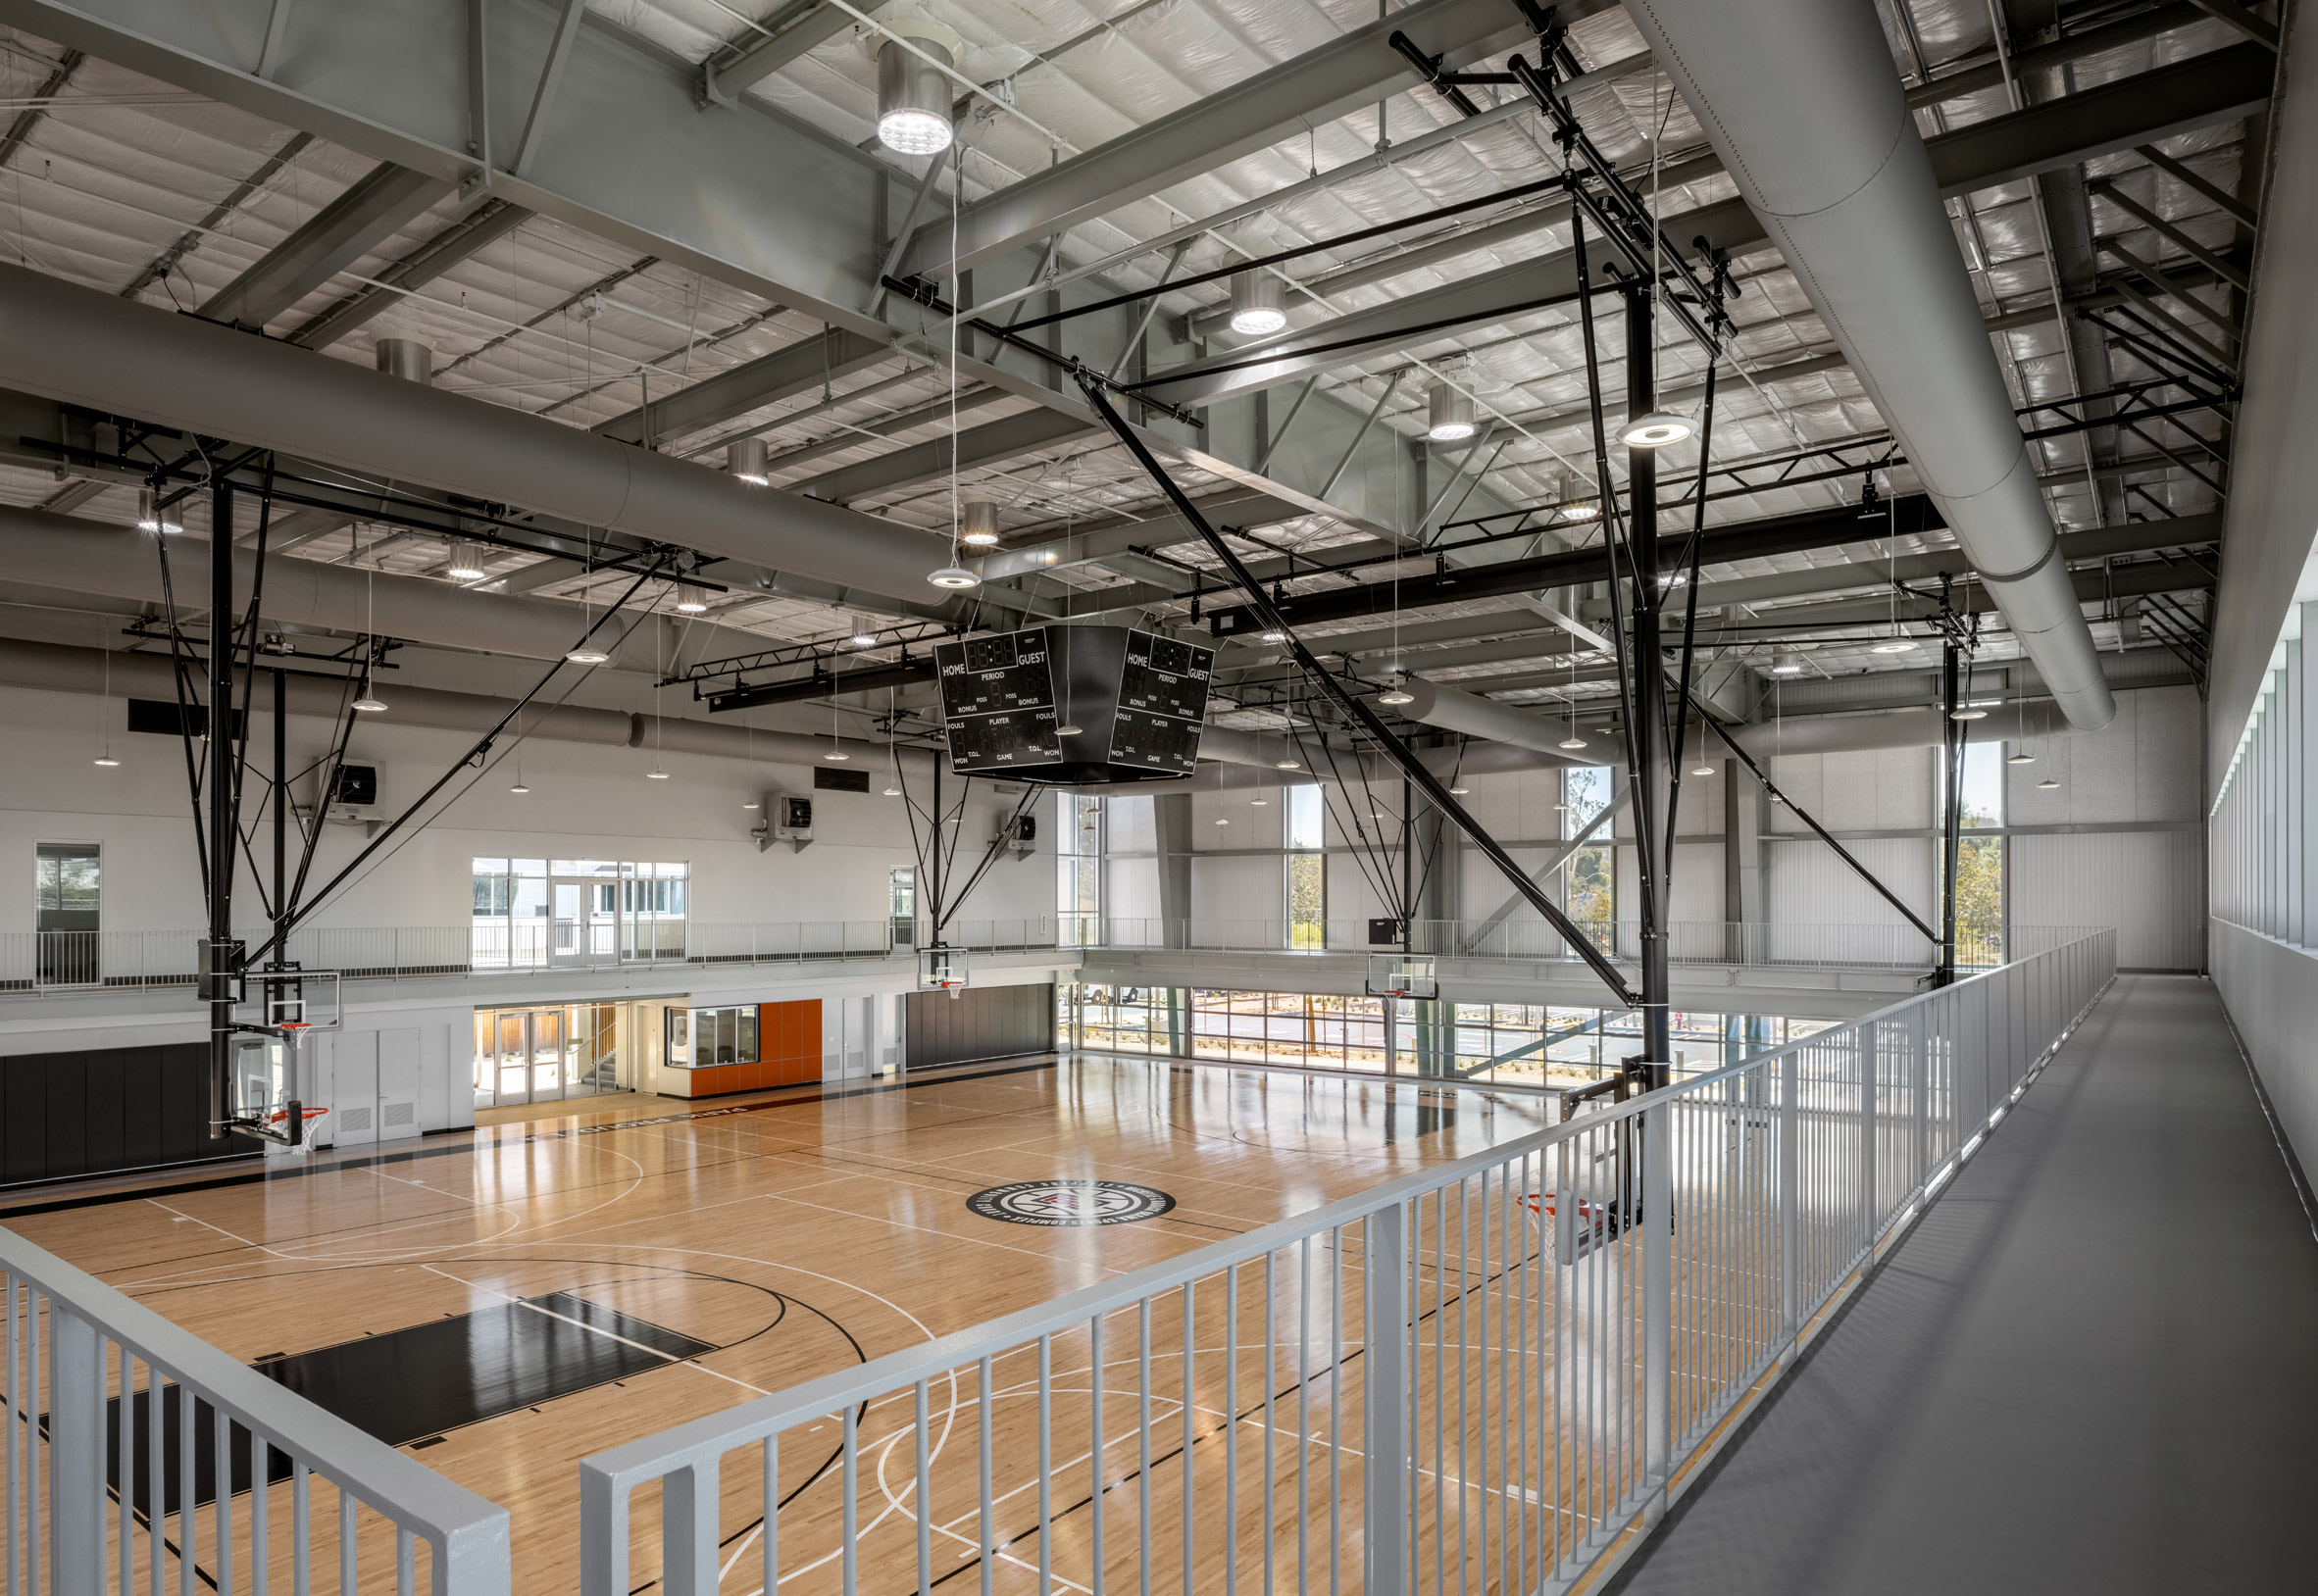 Basketball court with skylights